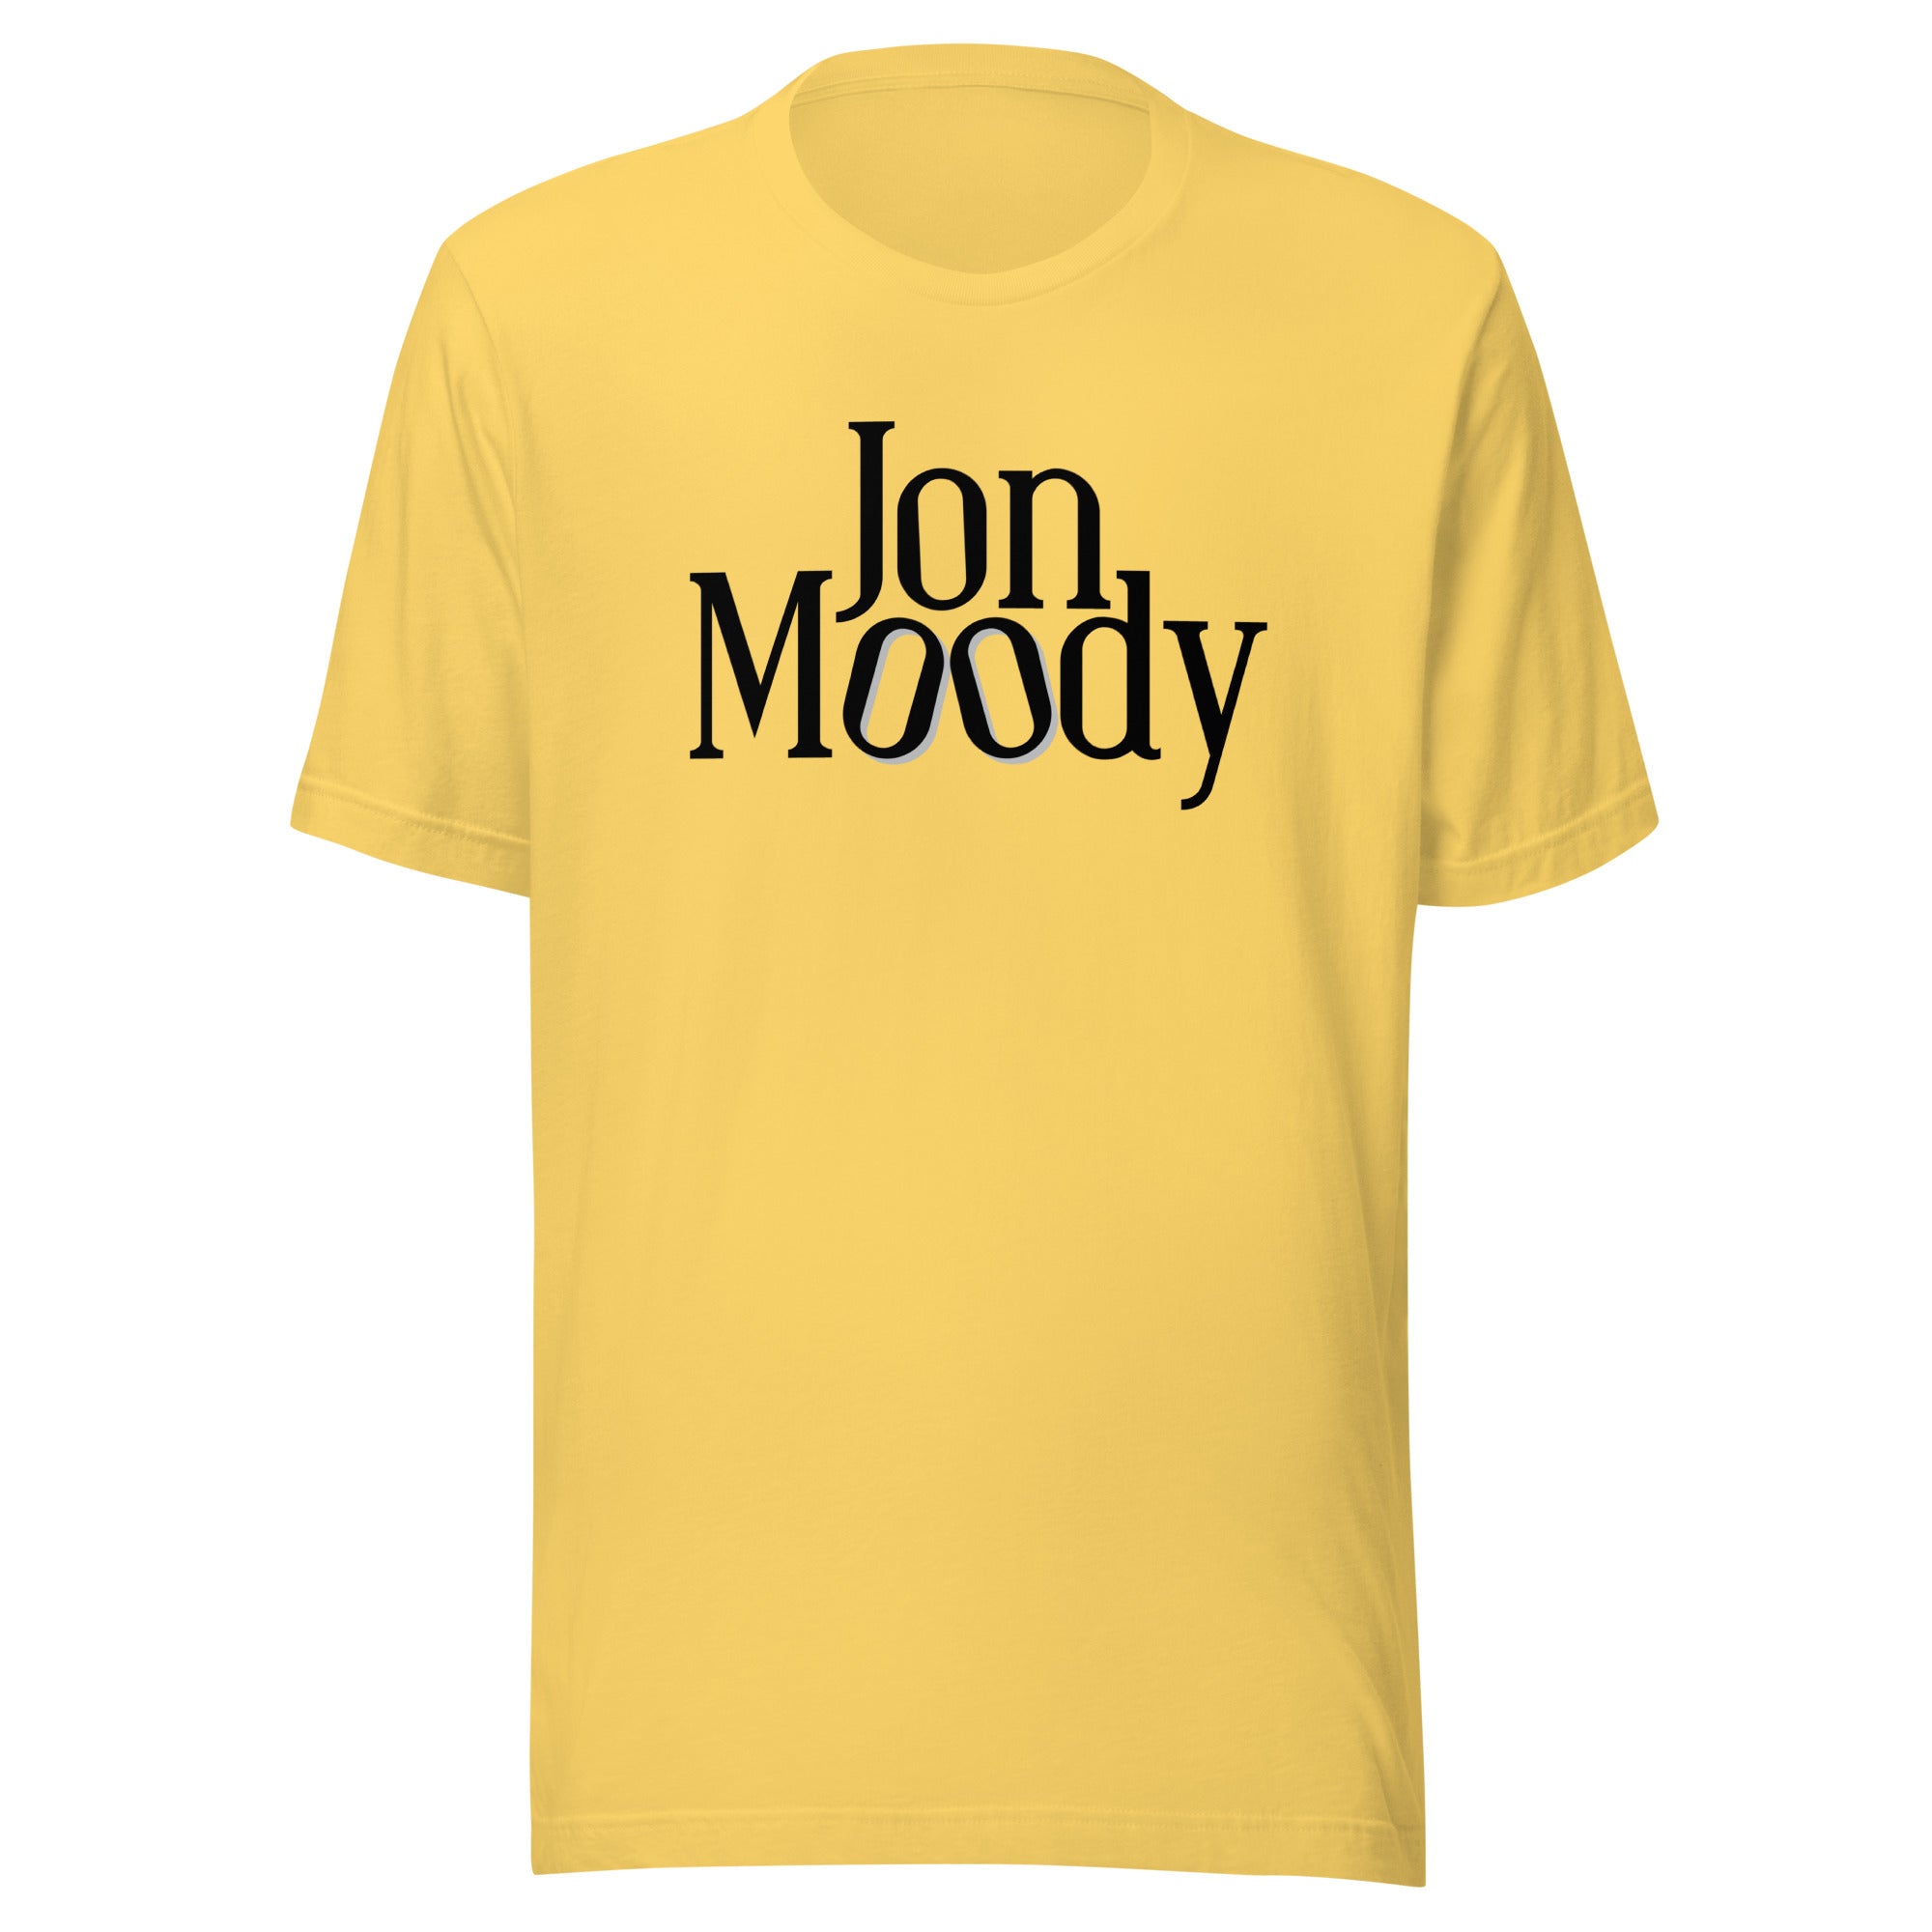 Jon Moody - Unisex t-shirt